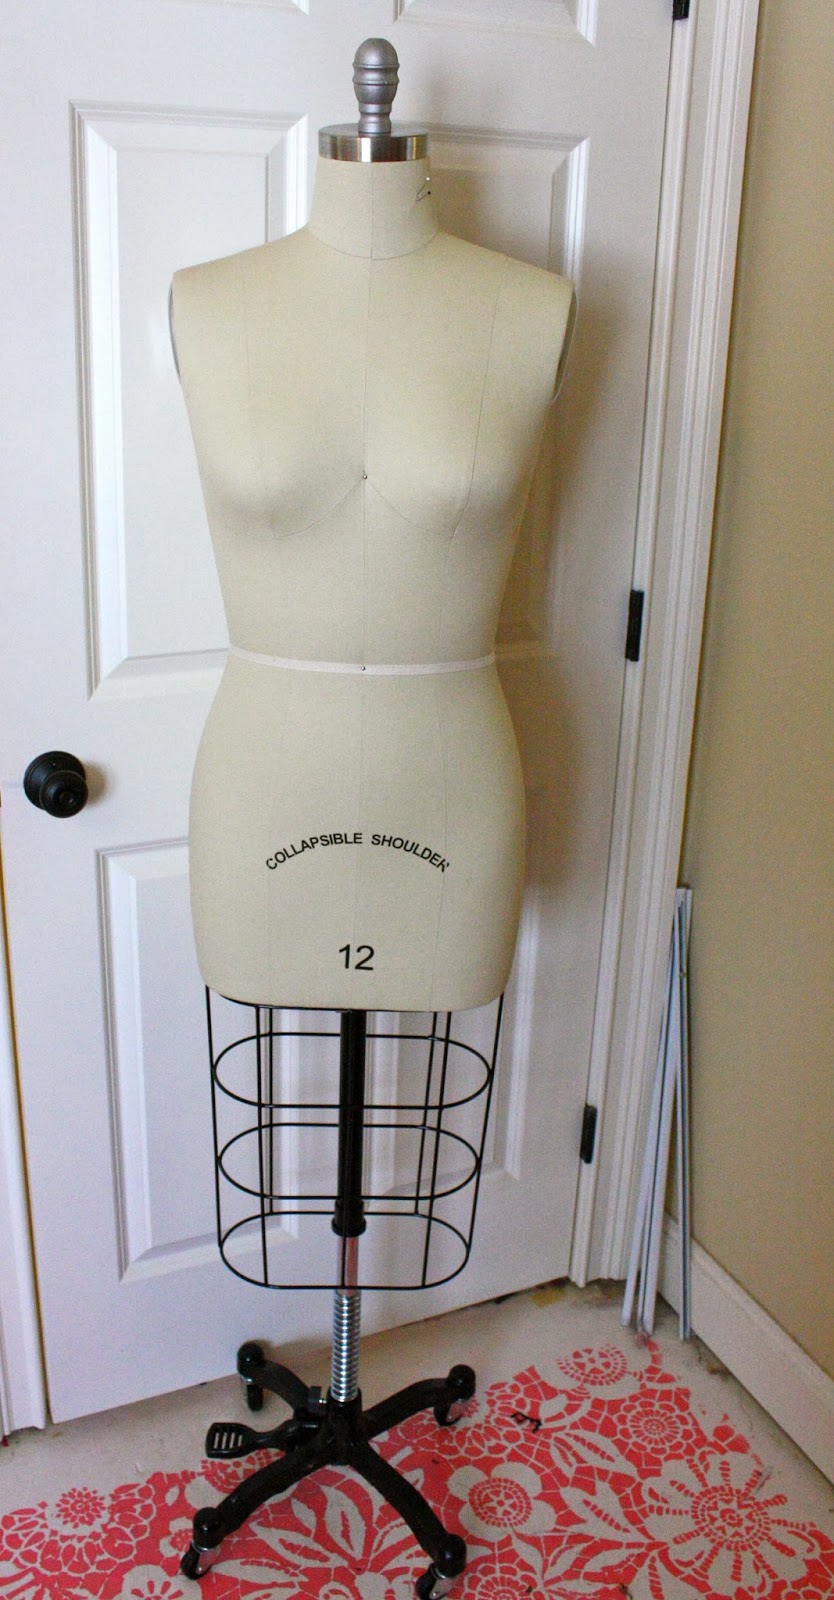 Professional Dressmakers Mannequin Form with Vintage Base & Cage